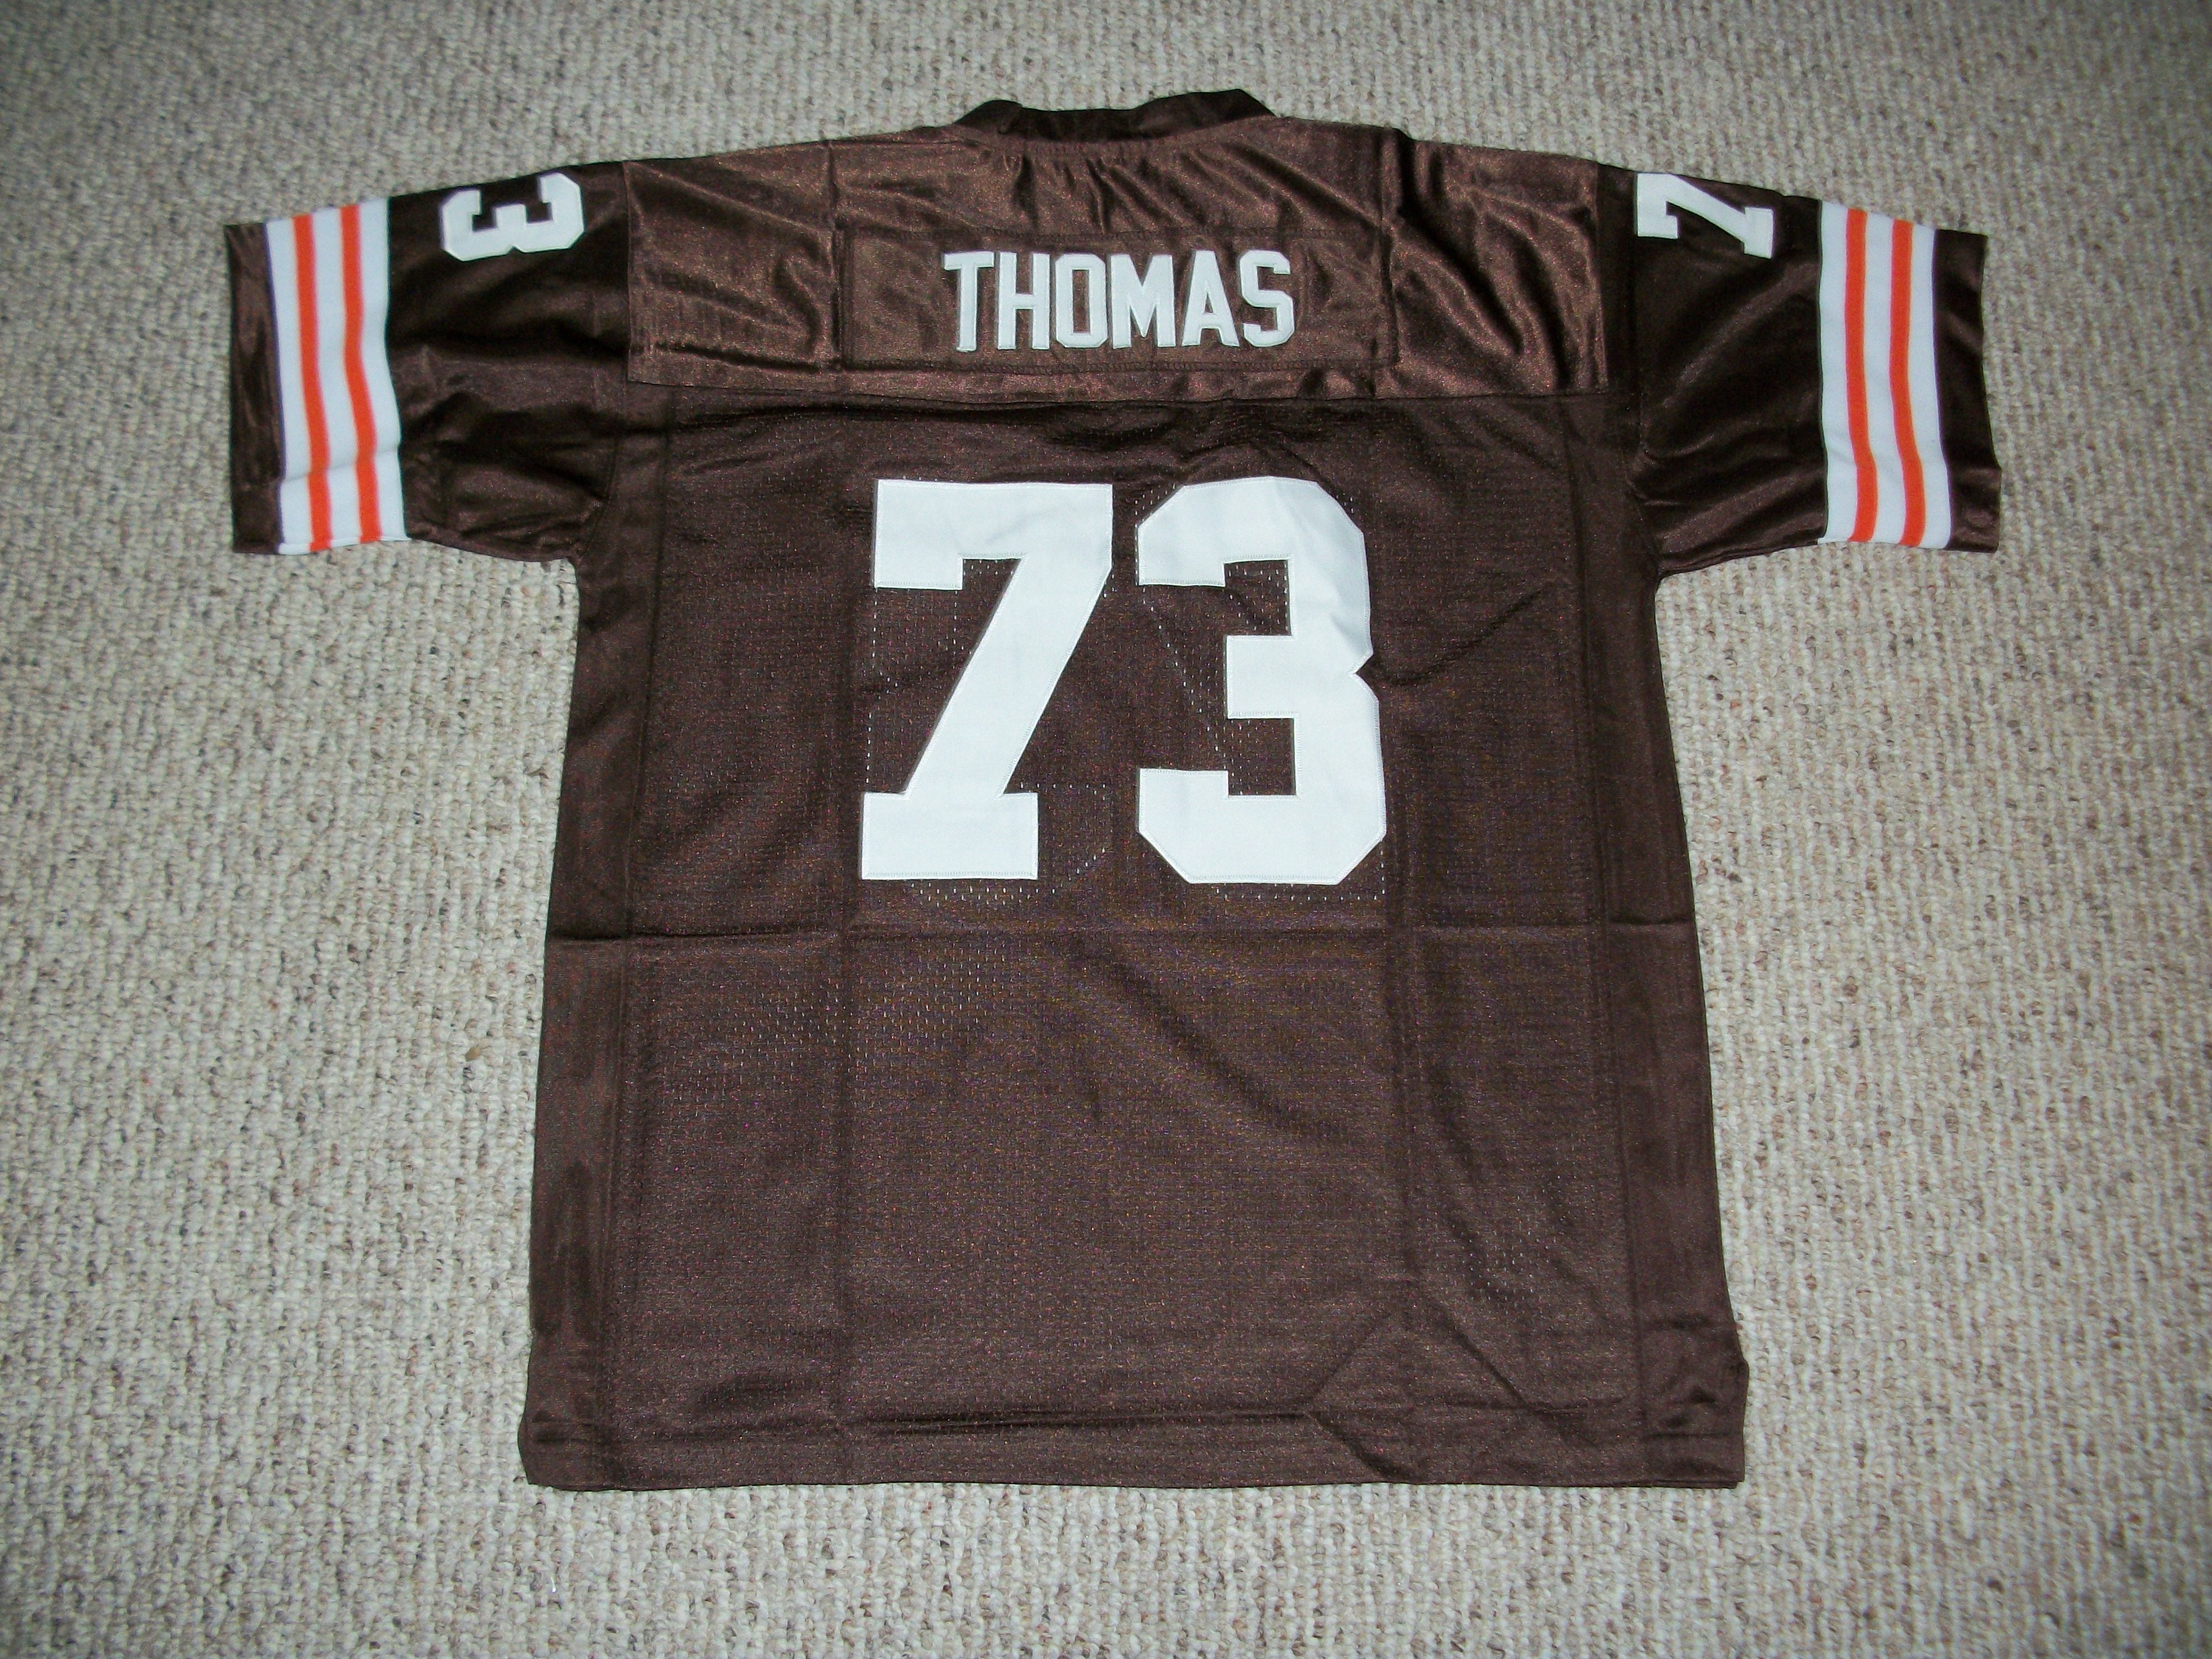 Limited Women's Joe Thomas Pink Jersey - #73 Football Cleveland Browns Rush  Fashion Size S